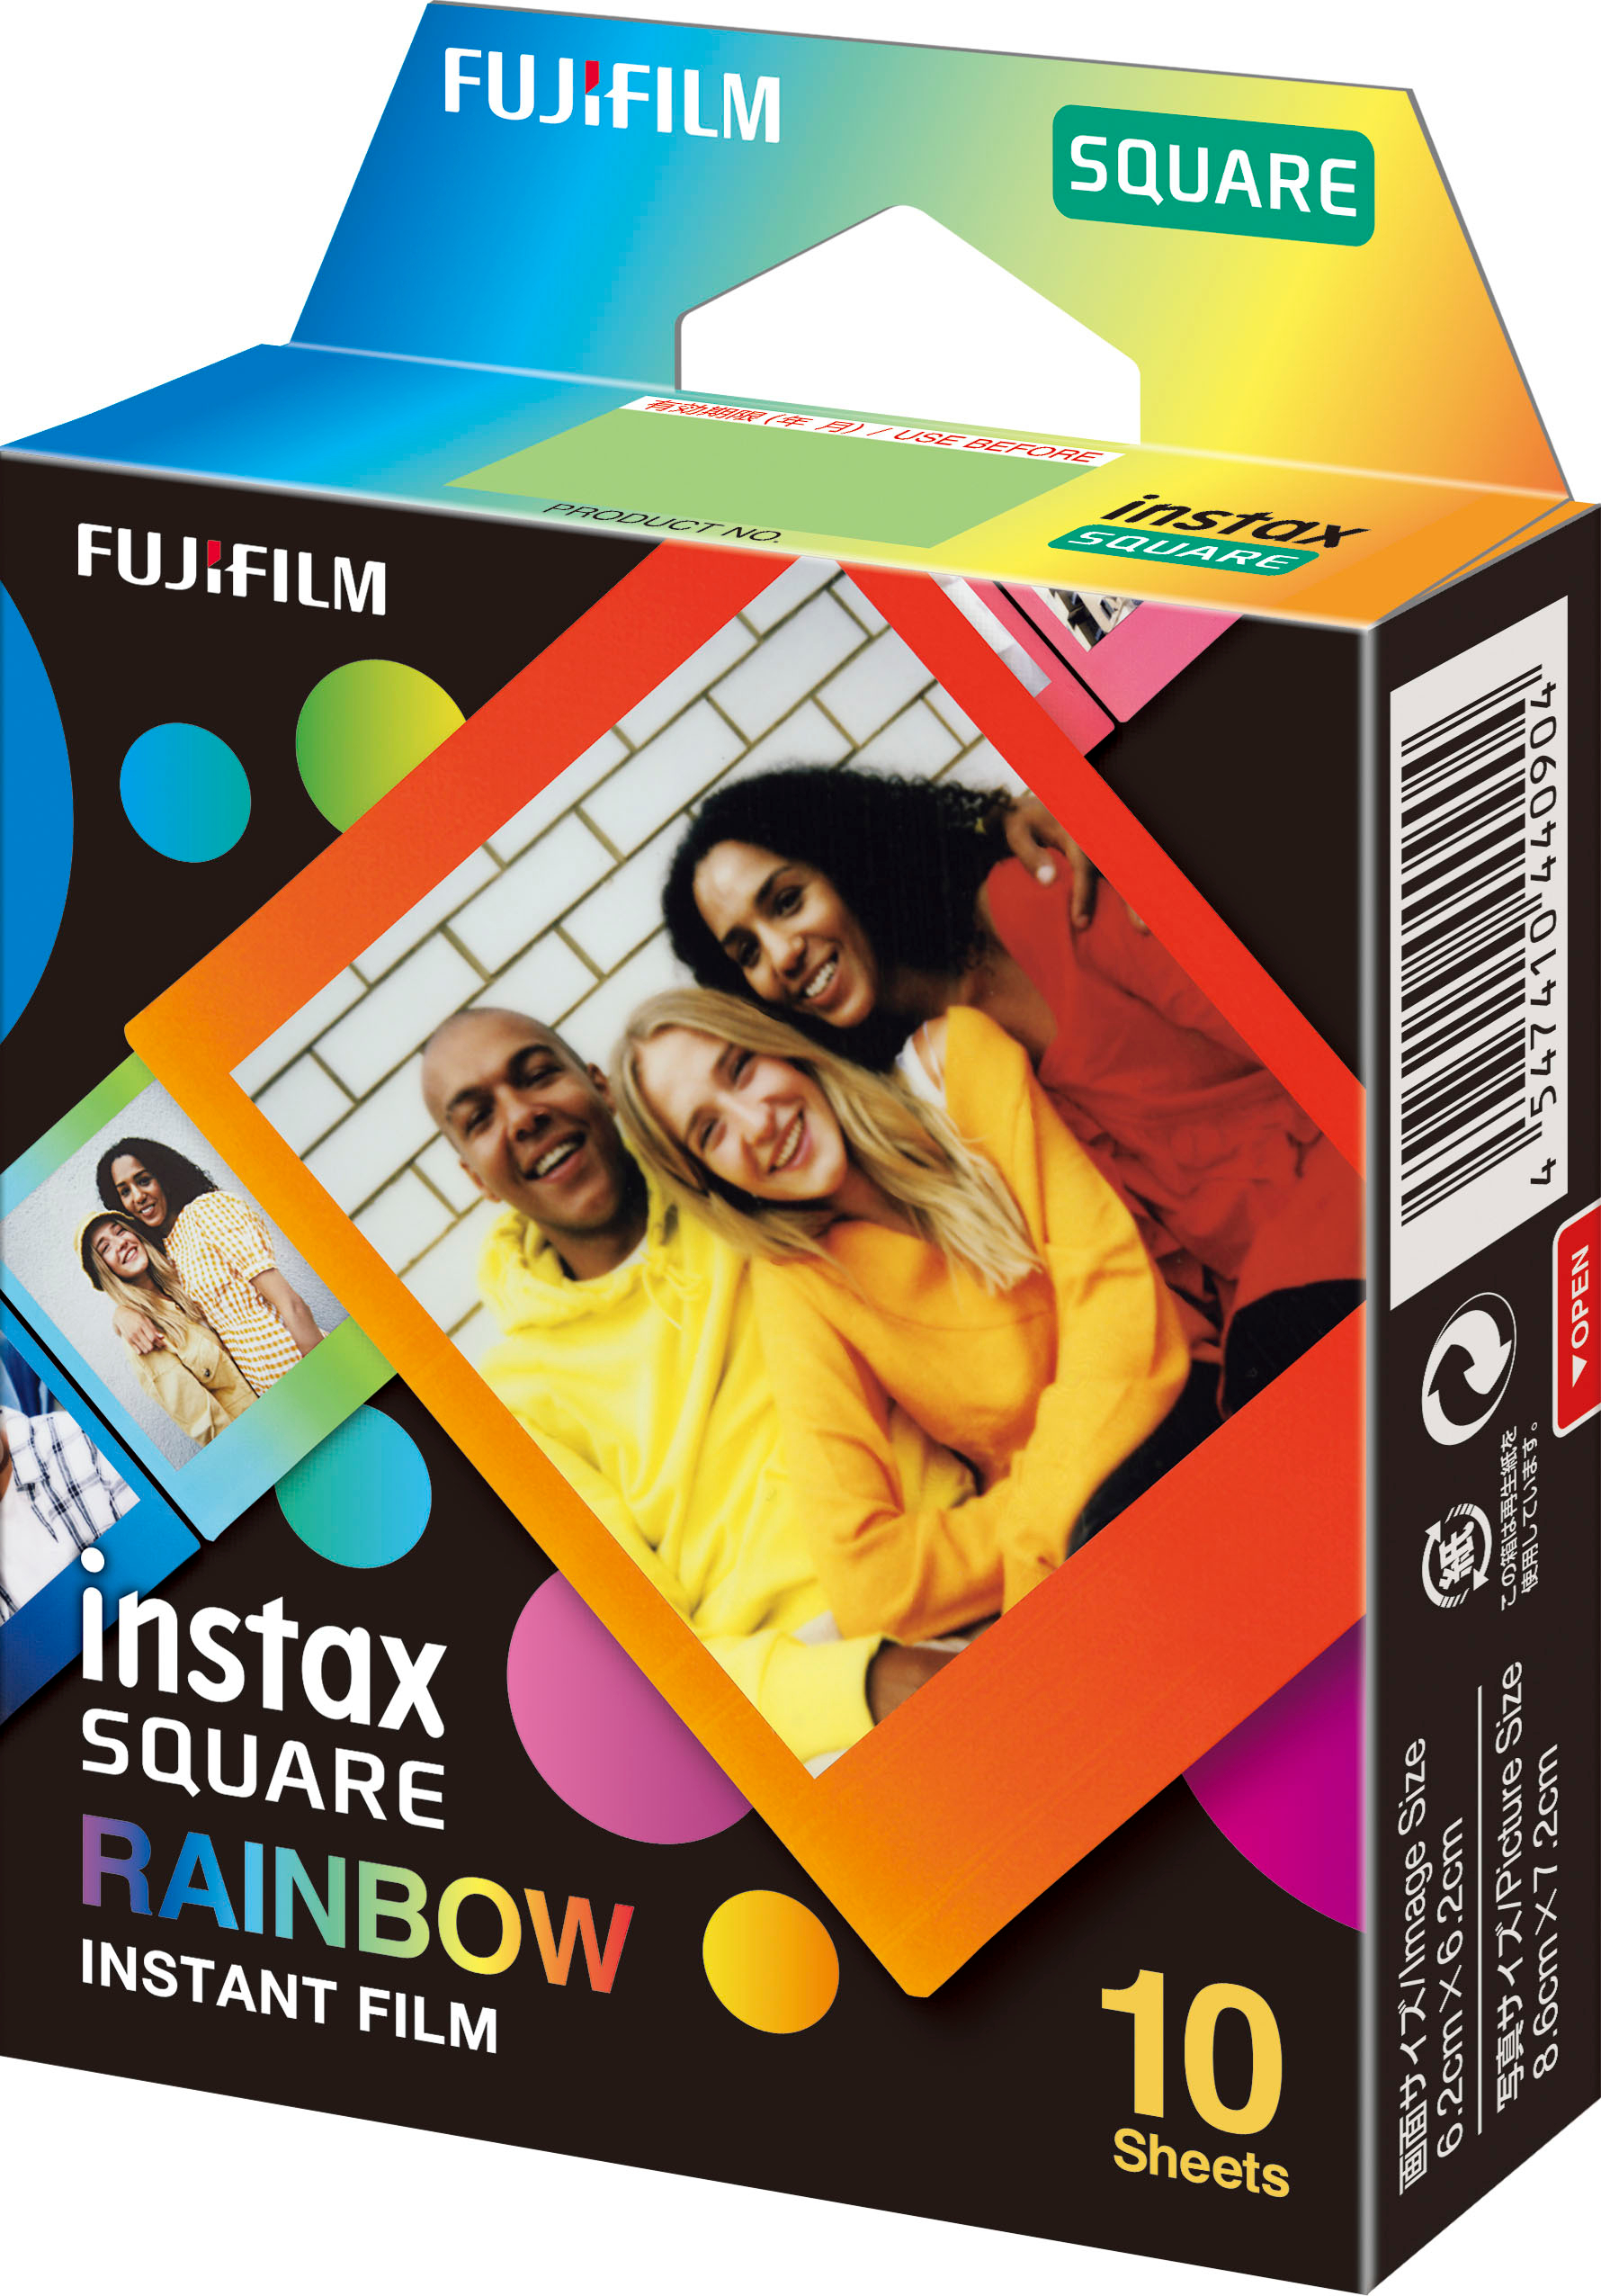 Film Fujifilm Instax Square avec illumination des étoiles. Film instantané.  Pour imprimante Instax SQ1, SQ20, SQ10, SQ6, Share SP-3, Lomo'Instant Square.  -  France